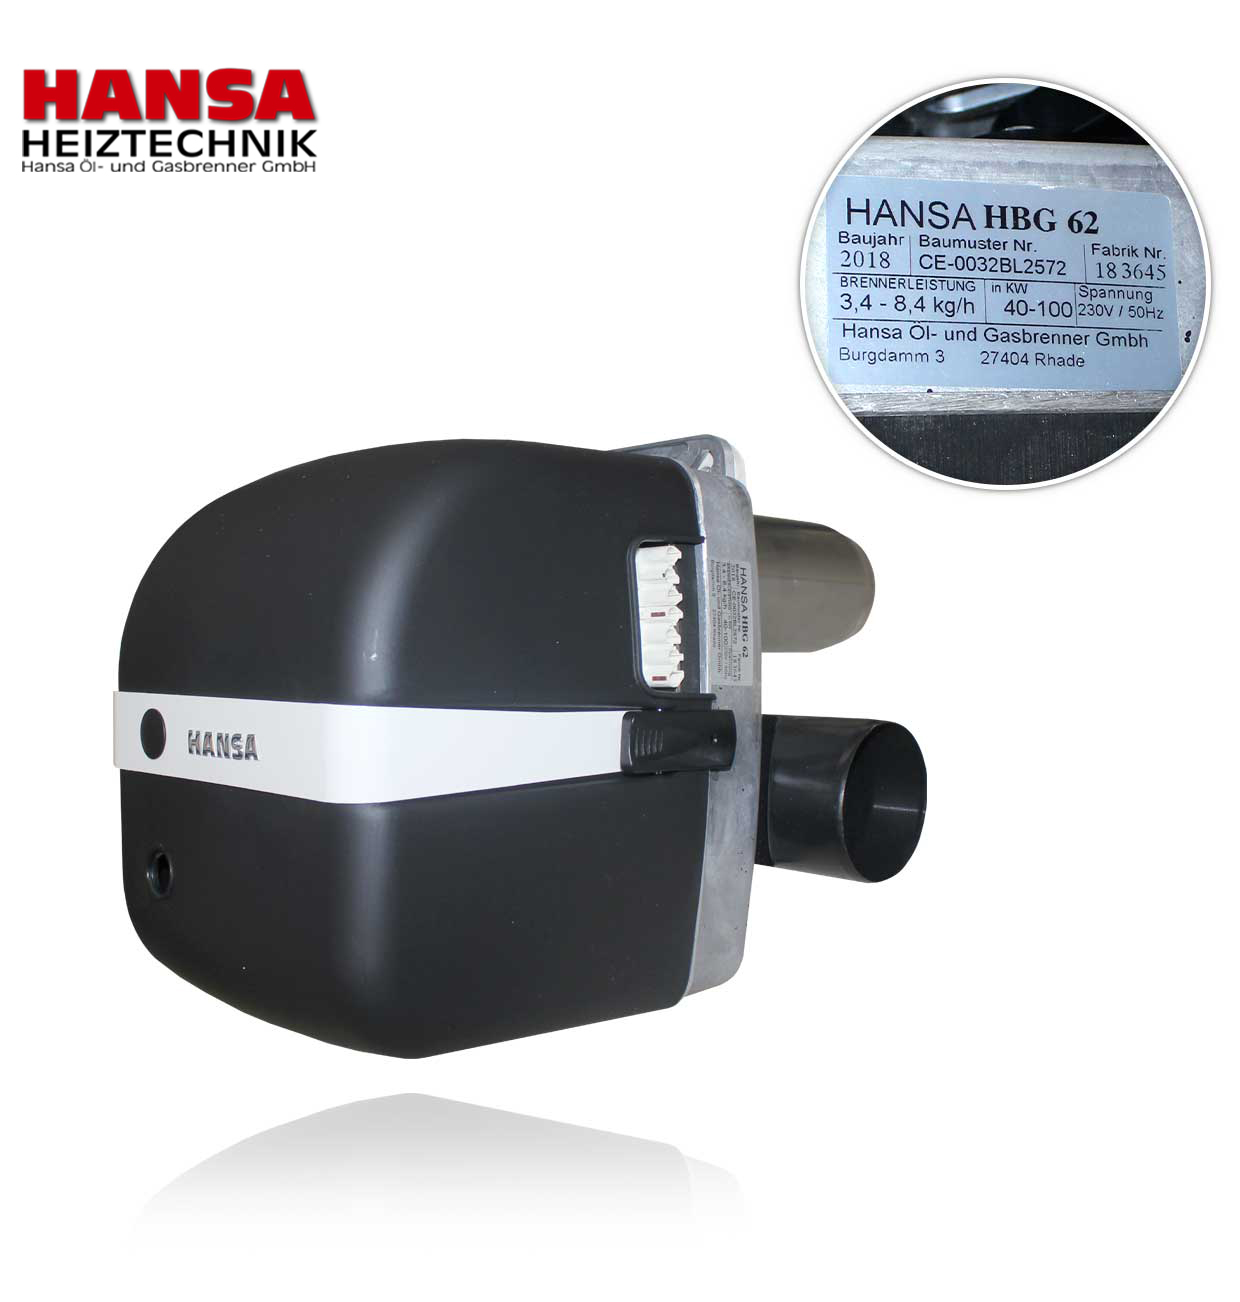 HBG 62  40-100kw with HANSA preheater